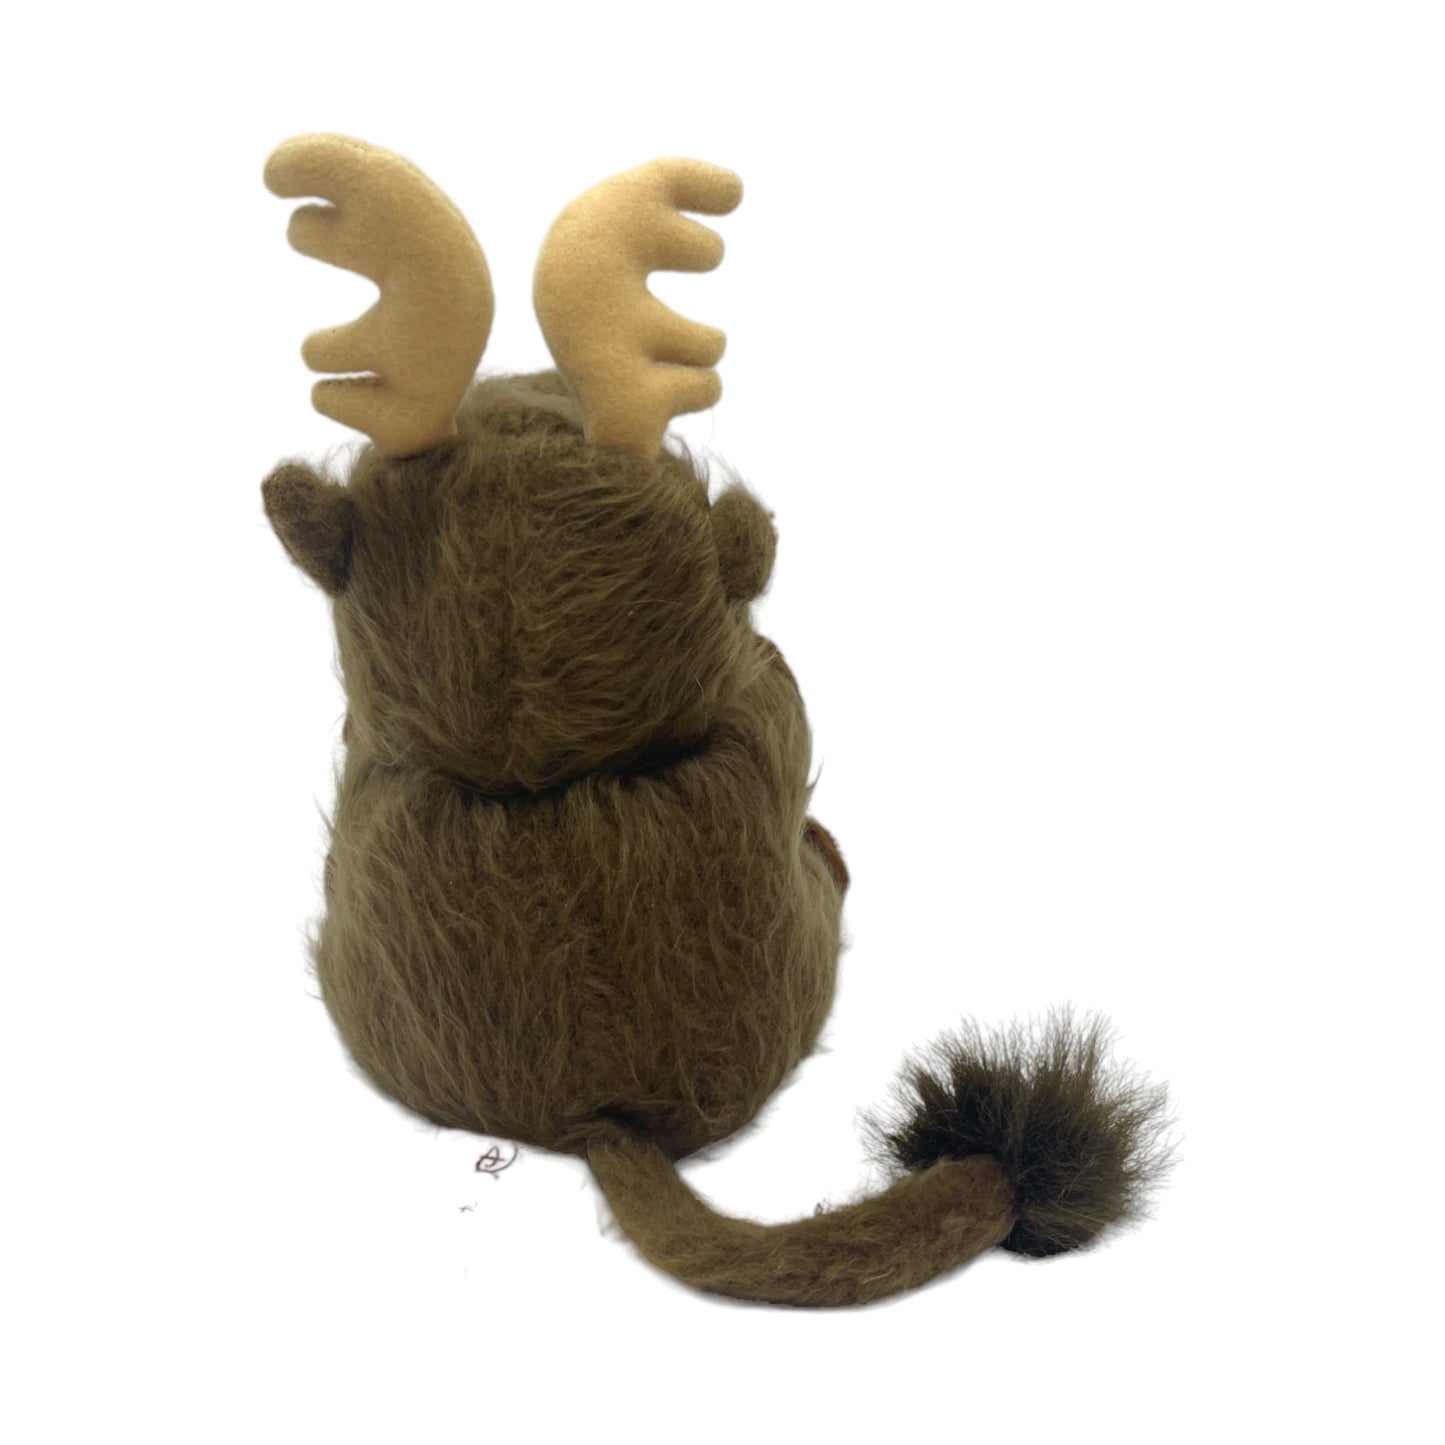 Disney Store - Fuzzy Moose Pooh - With Tag - Vintage - 8"